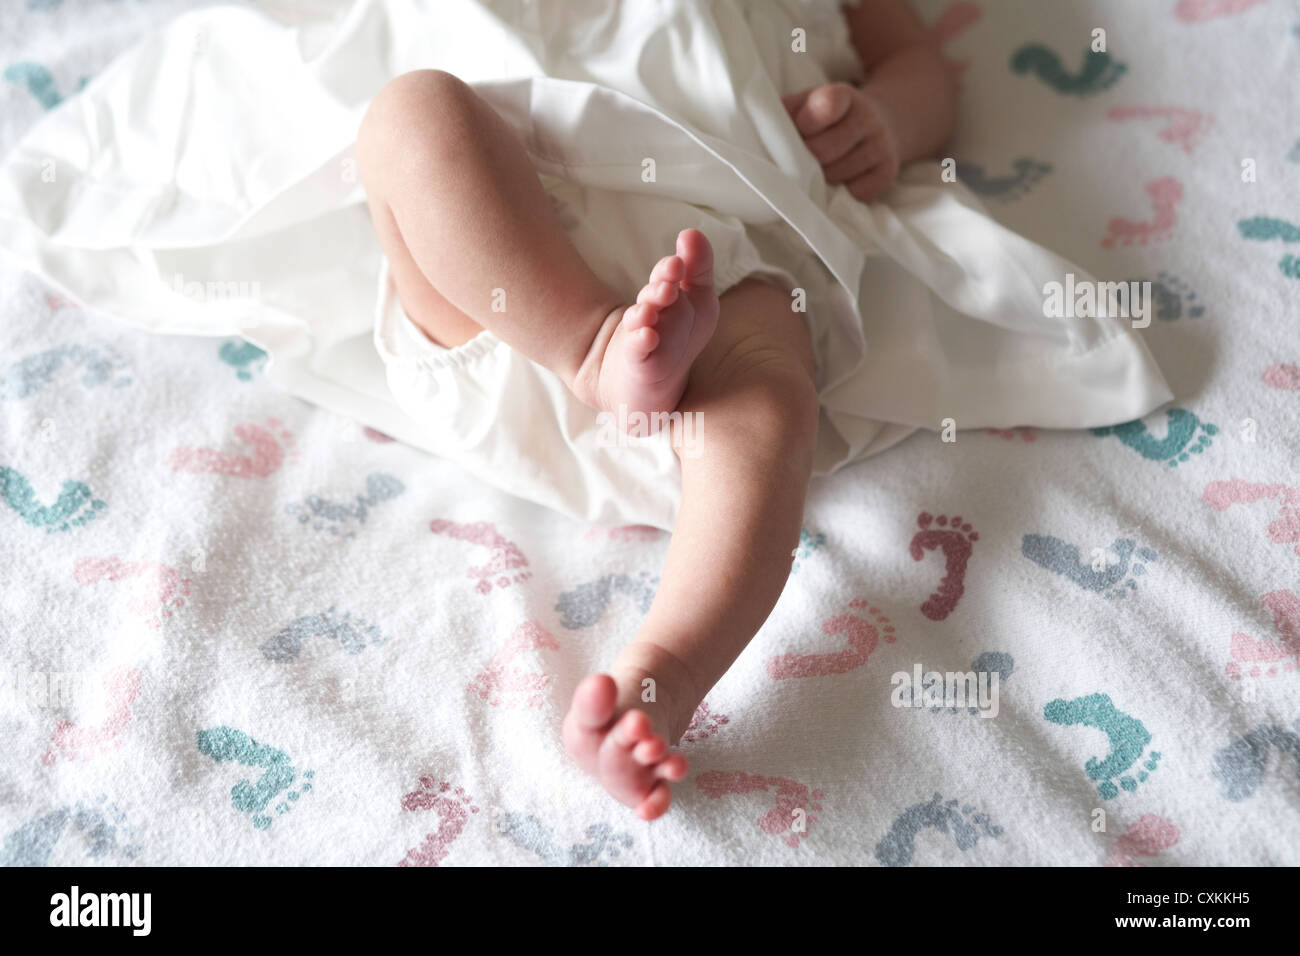 infant lying on a baby feet blanket Stock Photo